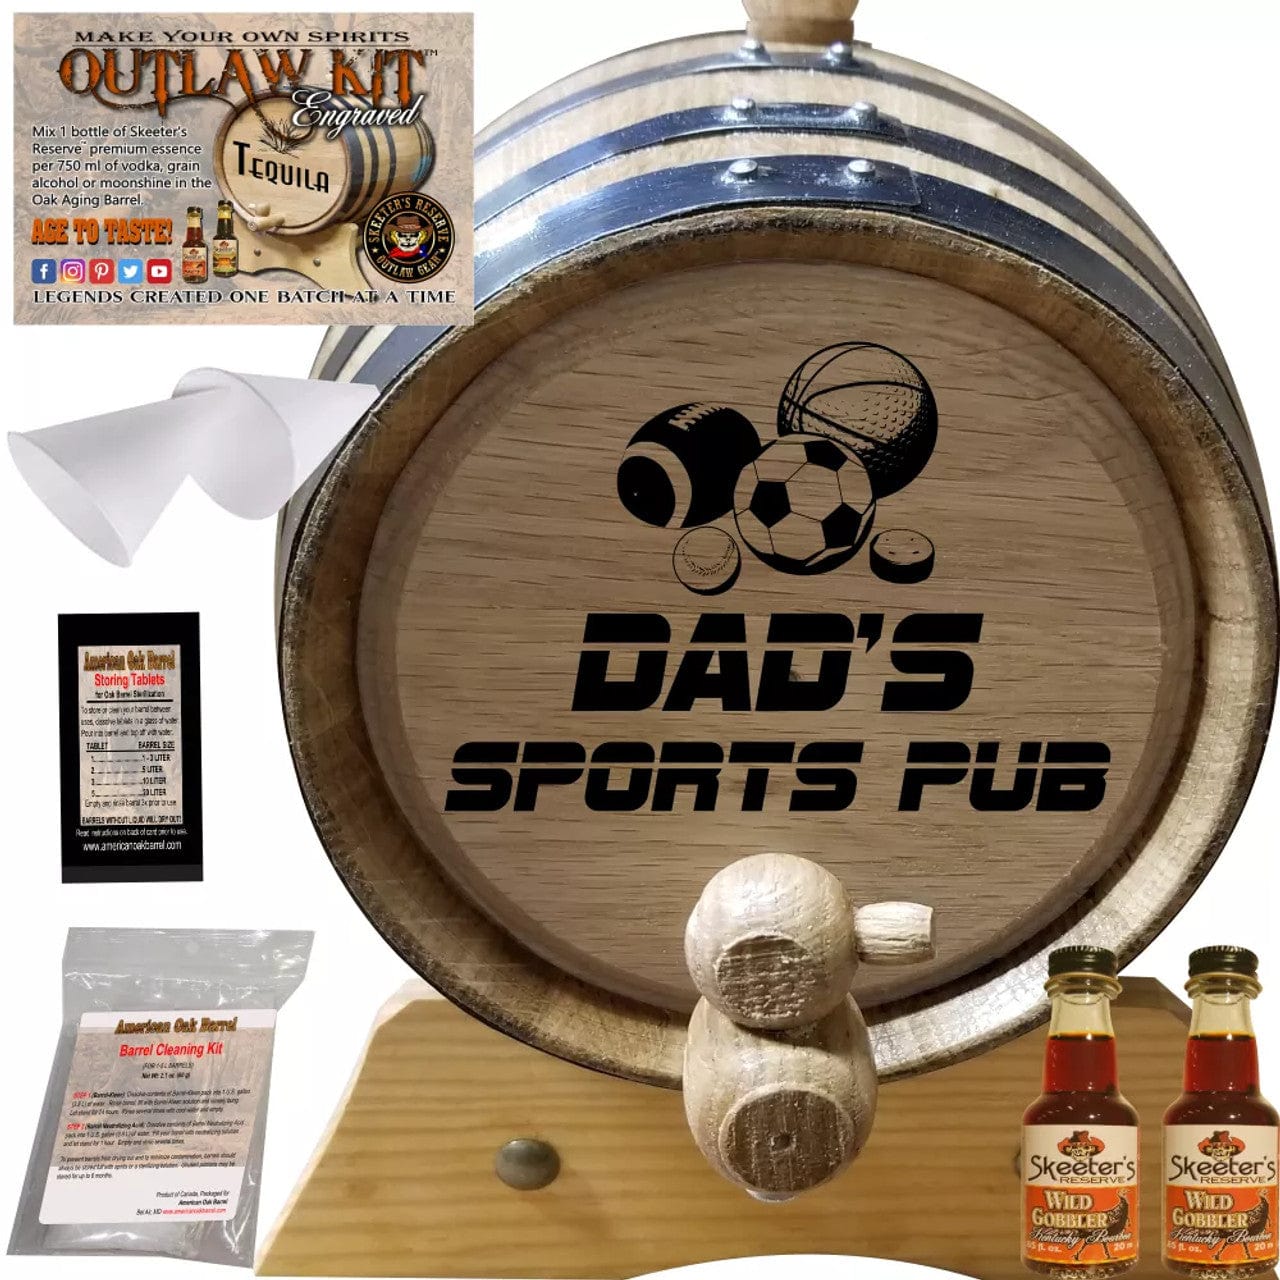 American Oak Barrel Outlaw Kits 1 Liter (.26 gallon) / Dark Jamaican Rum American Oak Barrel Engraved Outlaw Kit™ (012) Dad's Sports Pub - Create Your Own Spirits